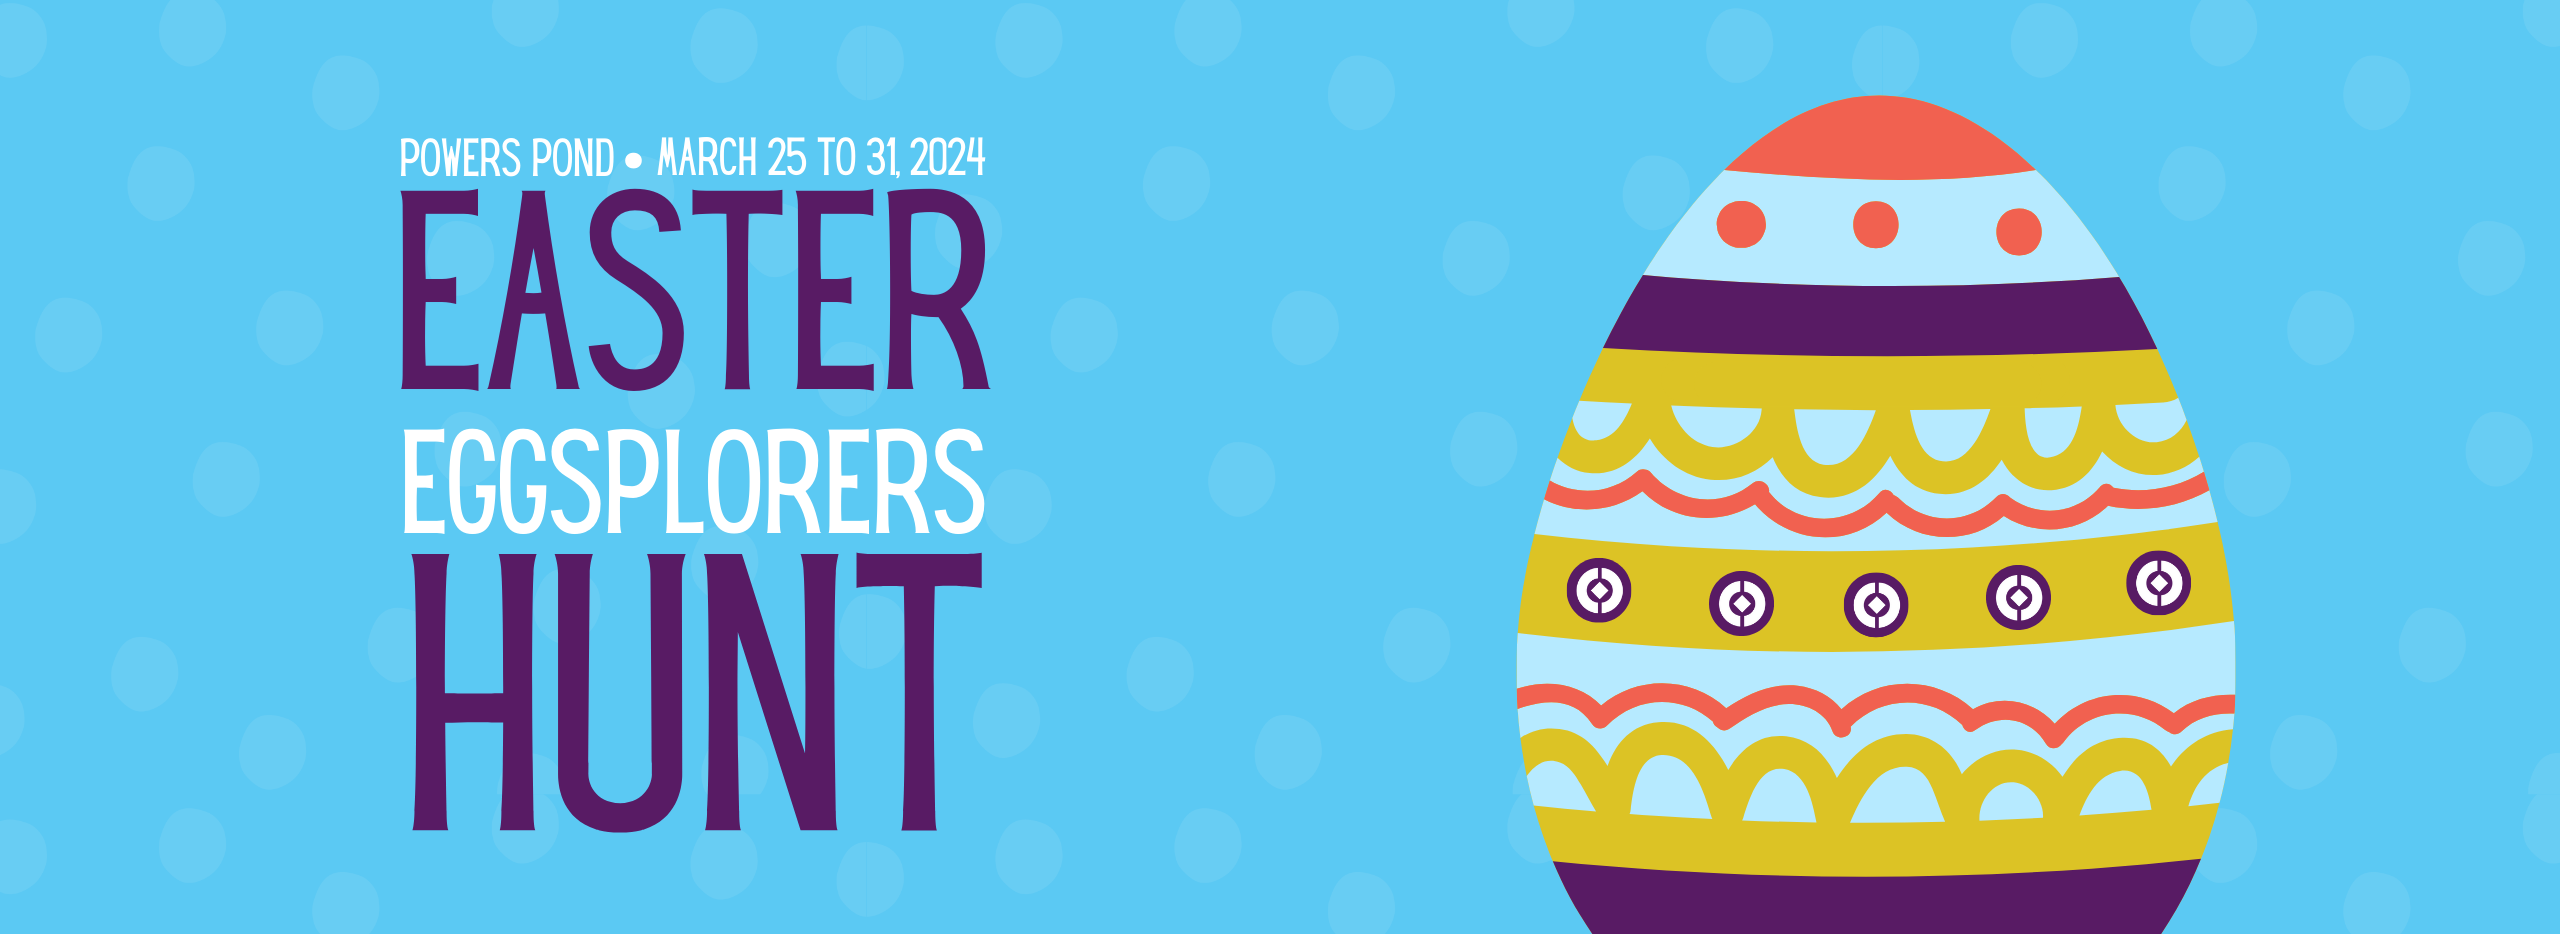 Easter Eggsplorers Hunt (5000 × 2626 px) (2560 x 934 px)